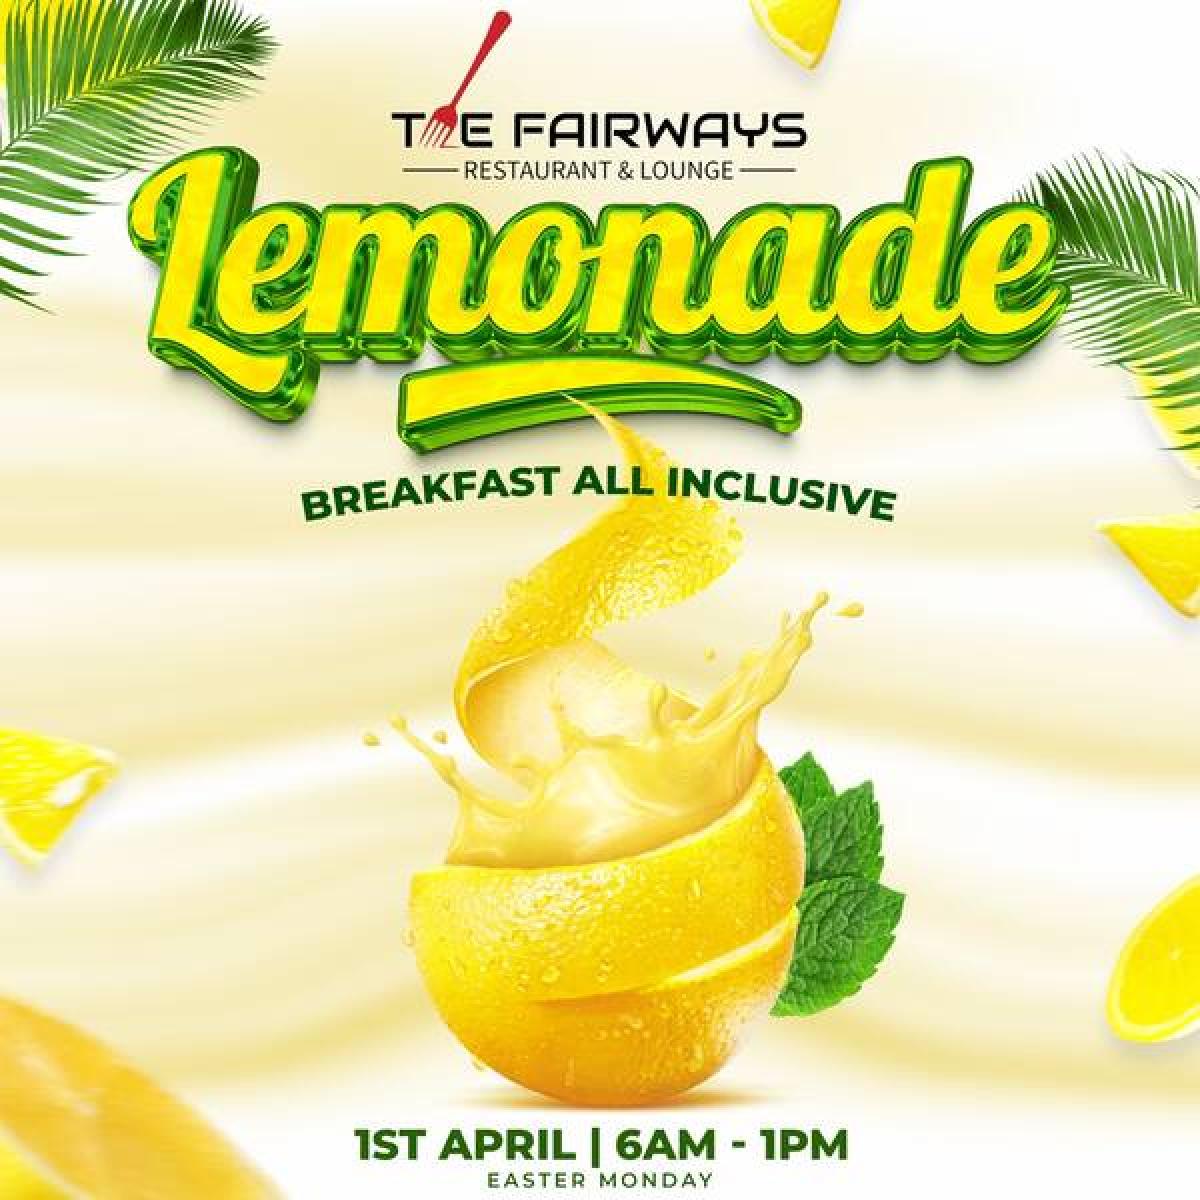 Lemonade Breakfast All inclusive flyer or graphic.